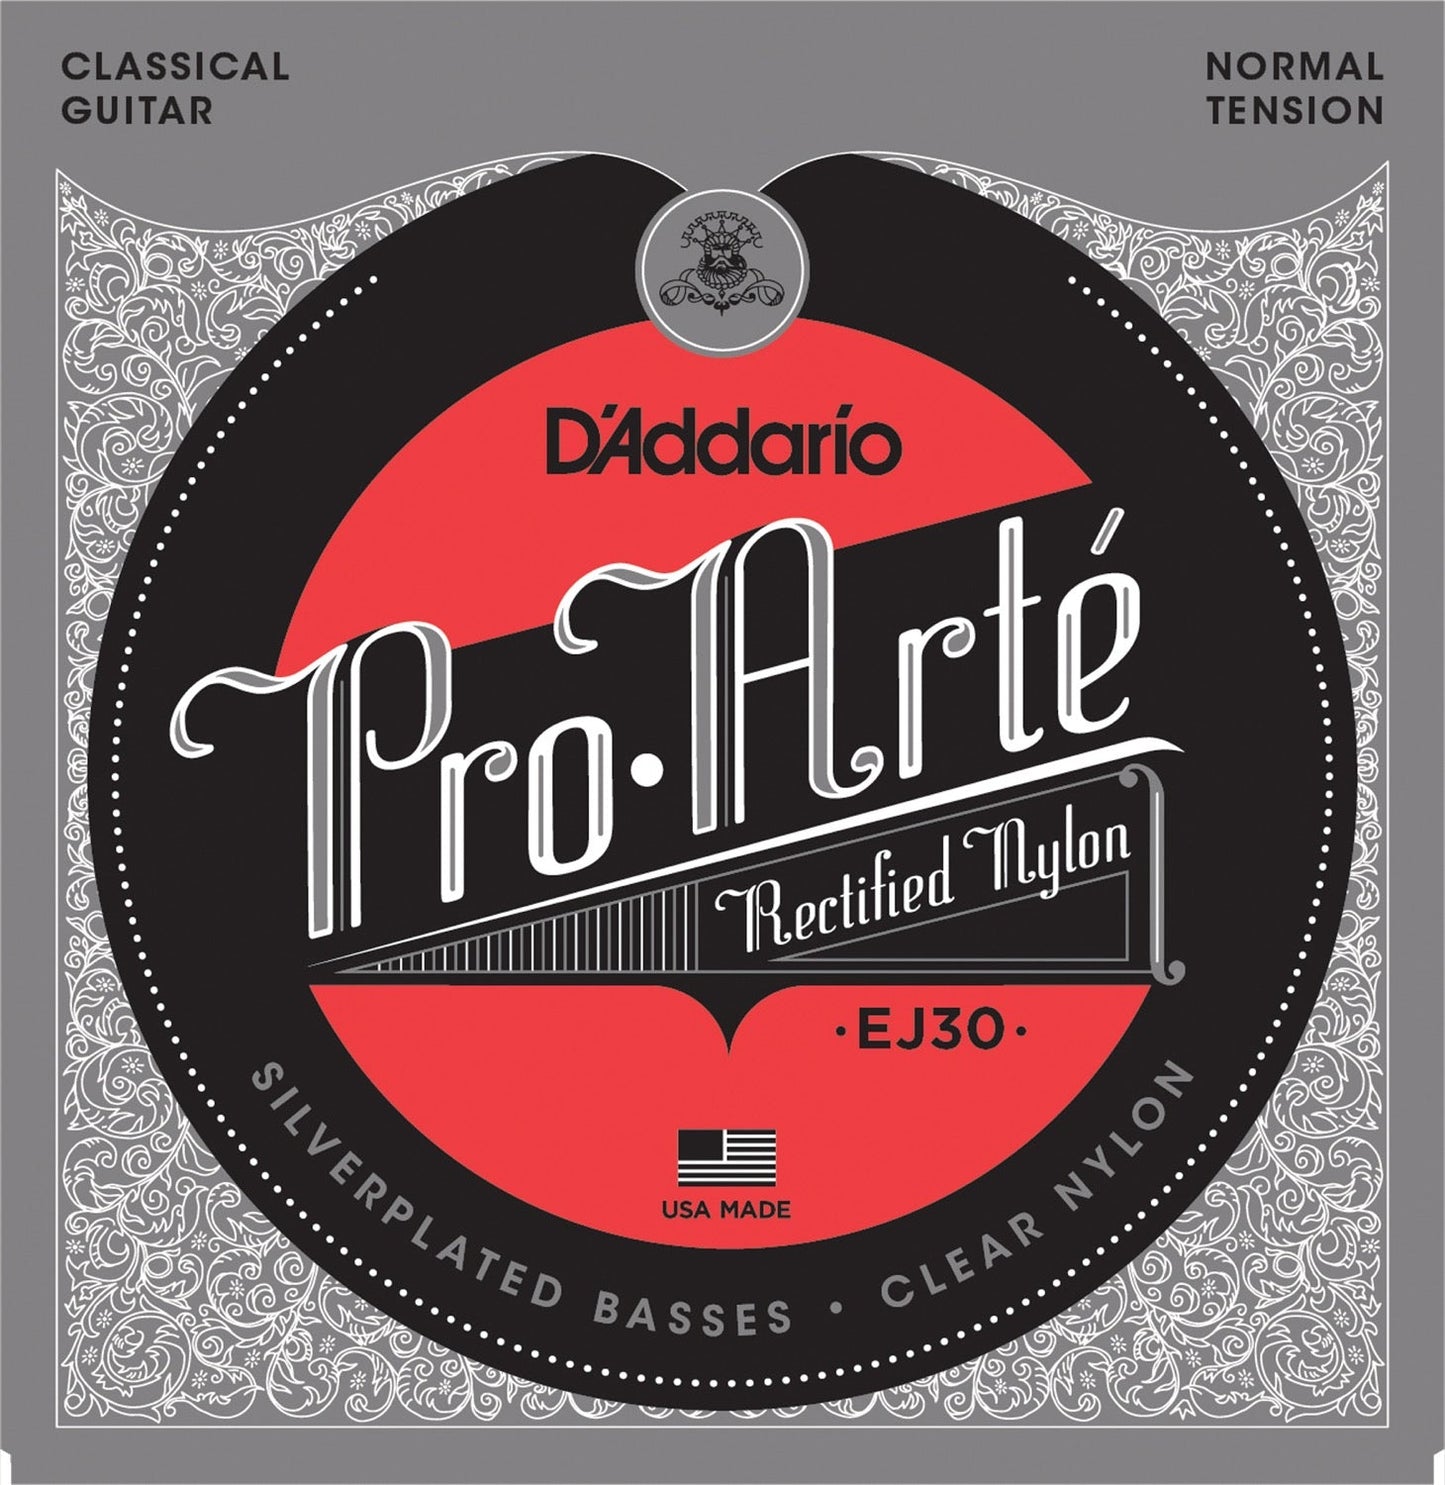 D'Addario - Pro Arte - Rectified Nylon